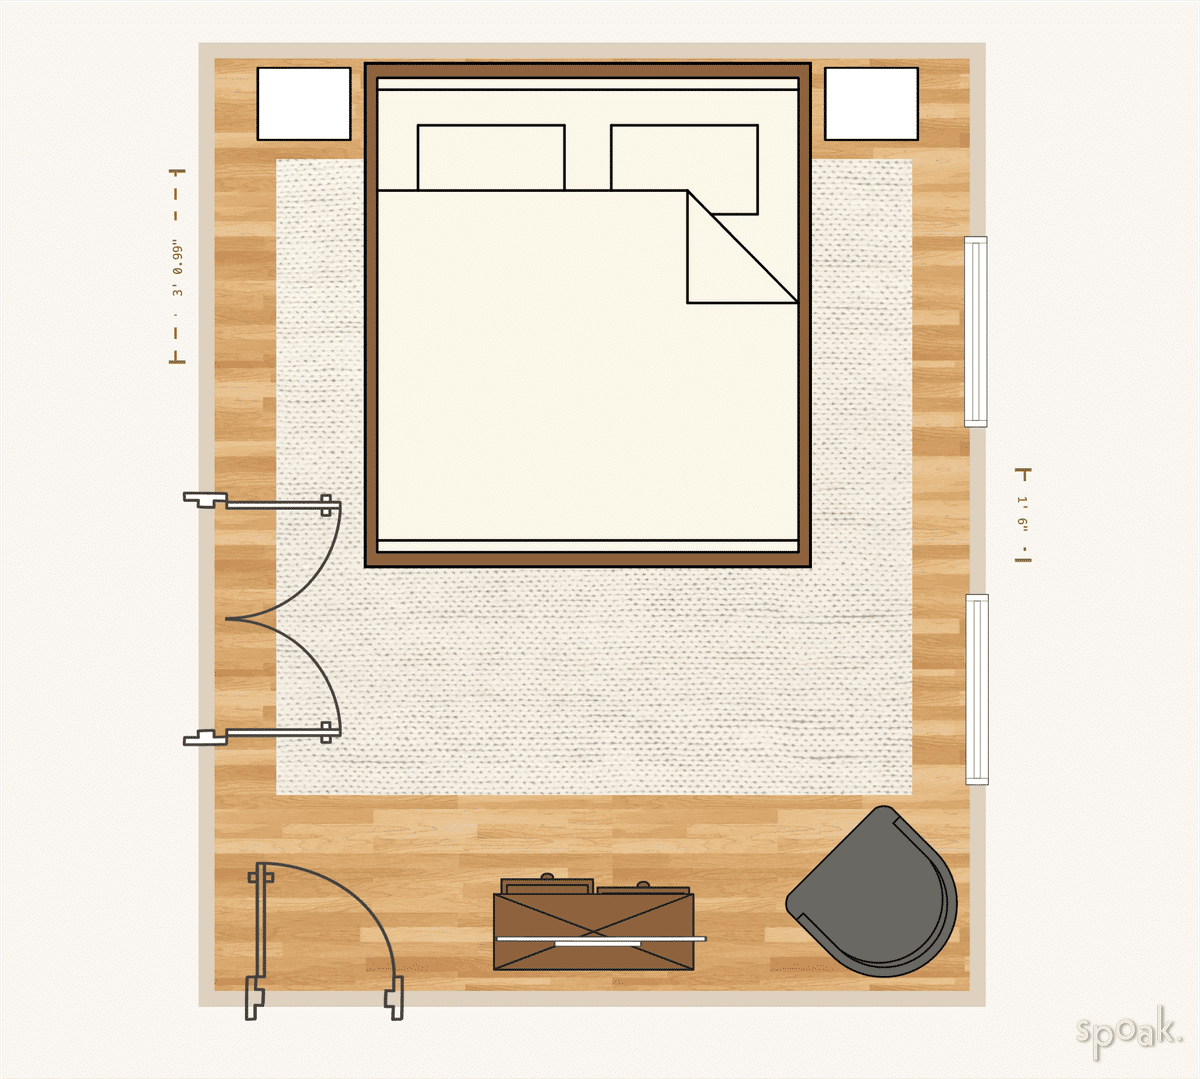 Primary Bedroom Layout designed by Elizabeth Sullivan